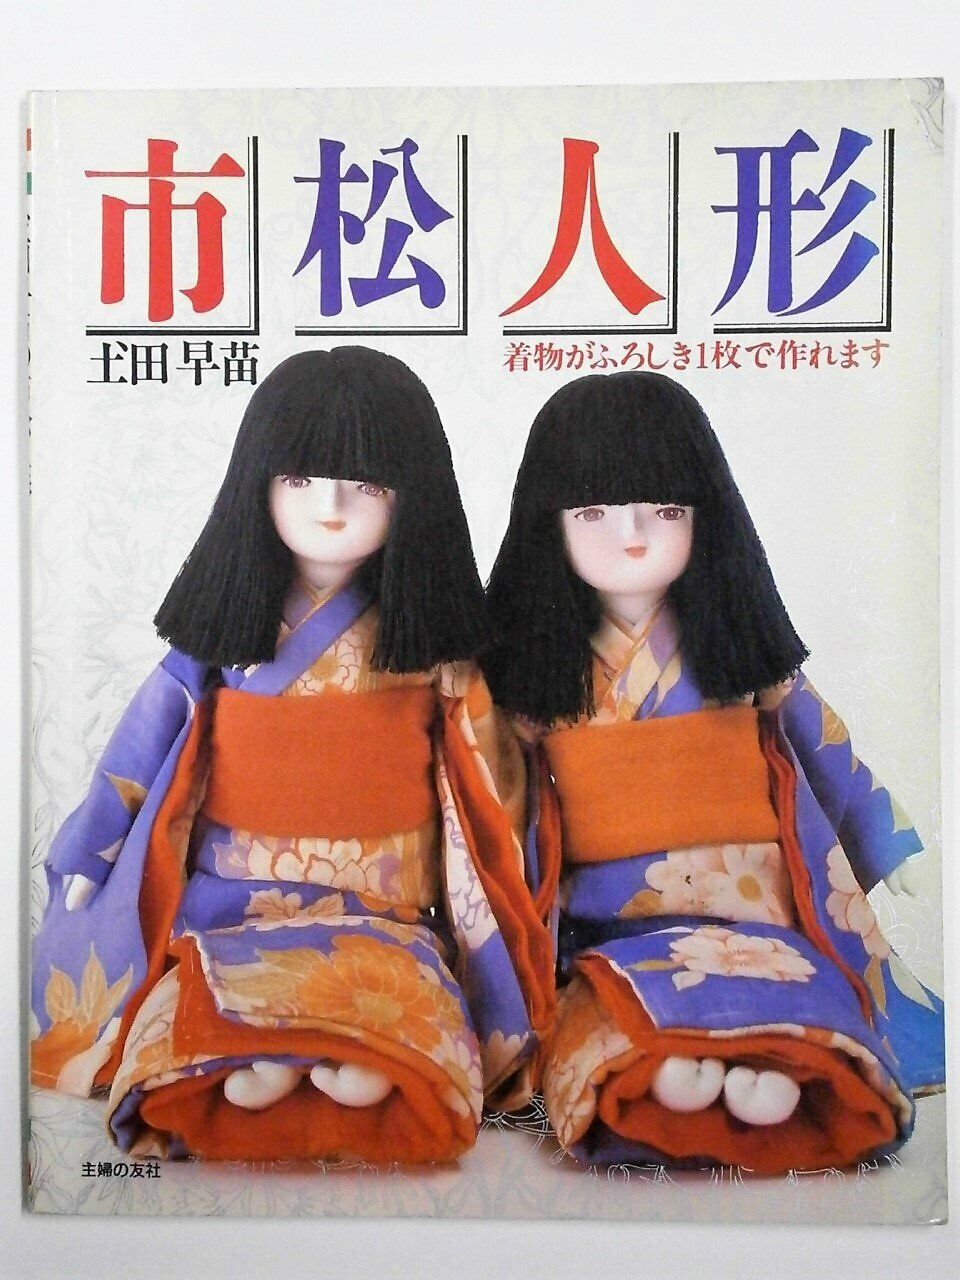 Rare Ichimatsu Doll by Sanae Tsuchida /Japanese Handmade Craft Pattern Book